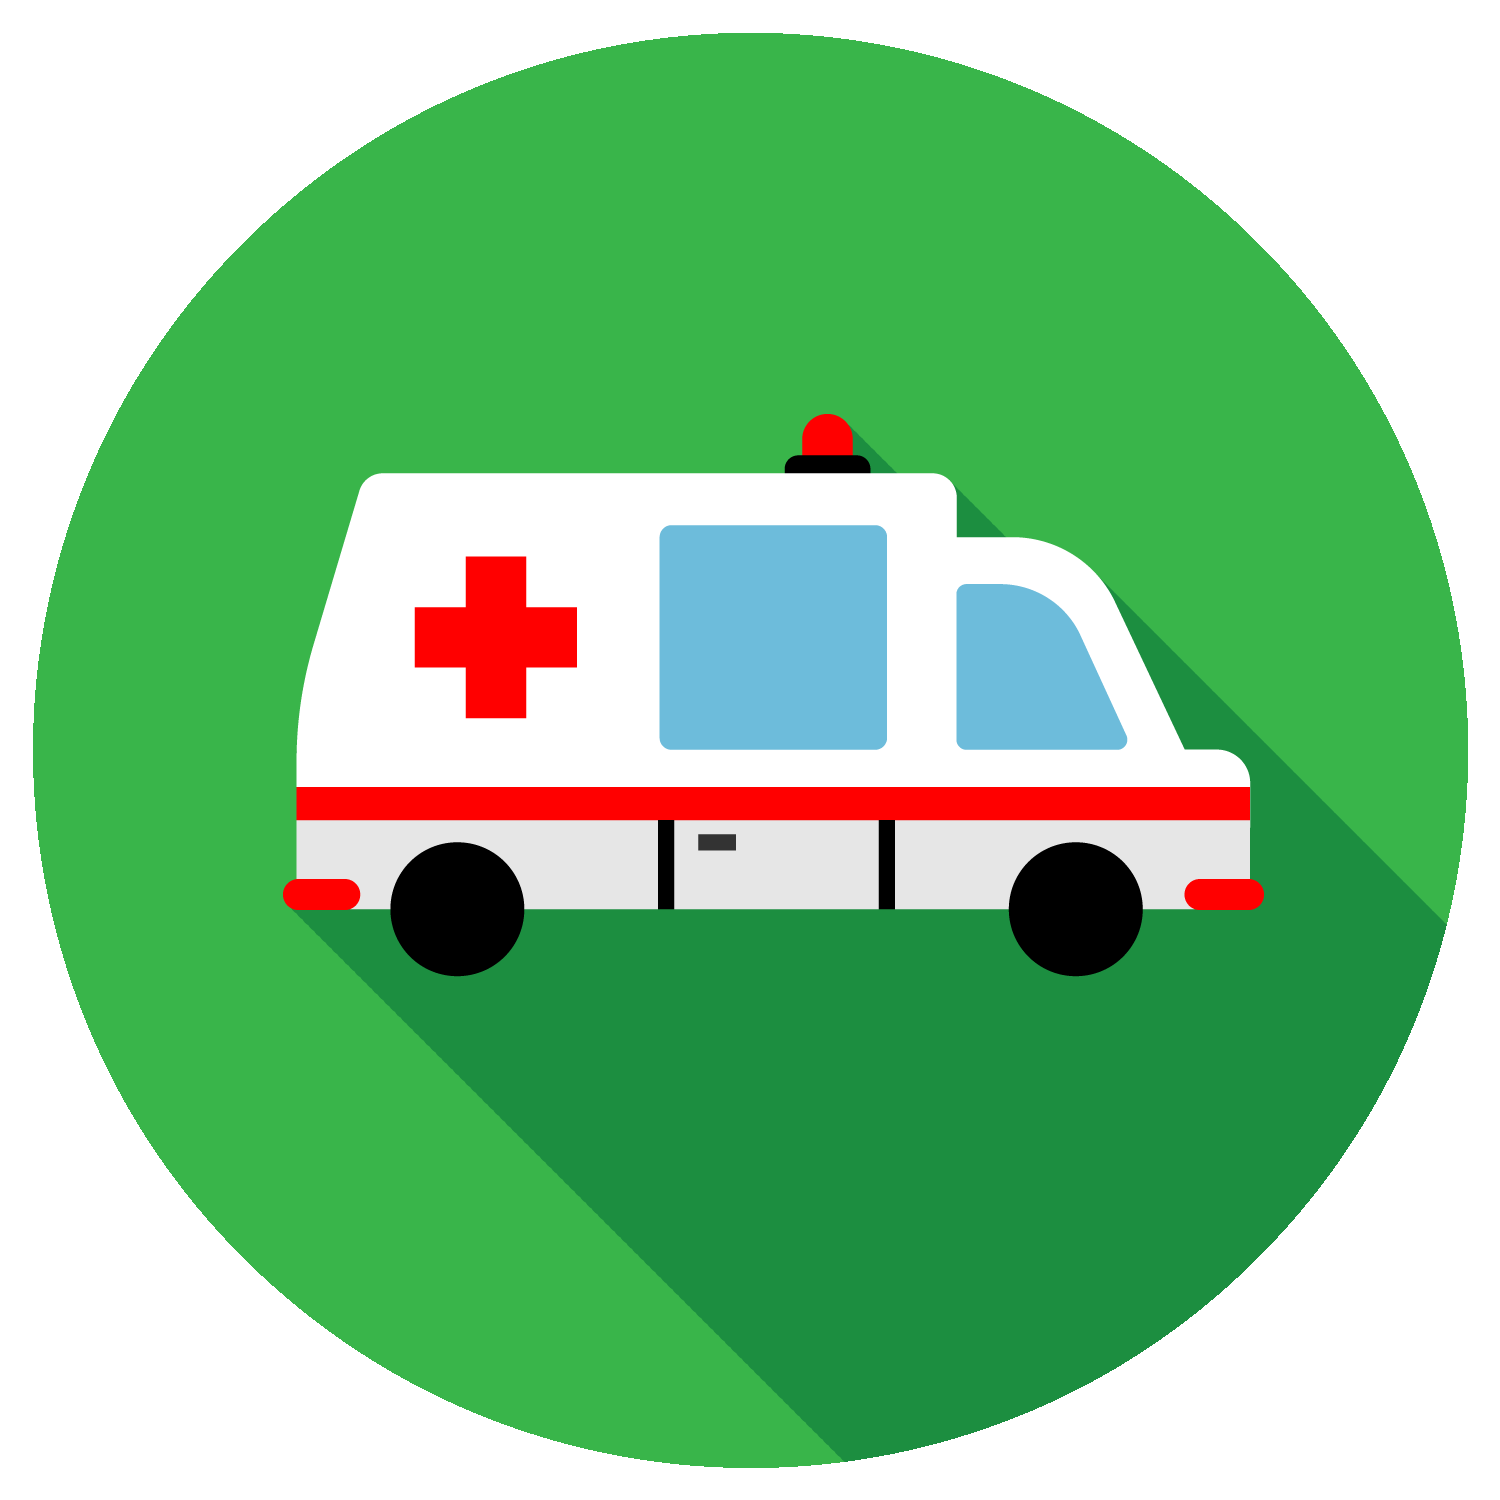 Graphic of an ambulance.